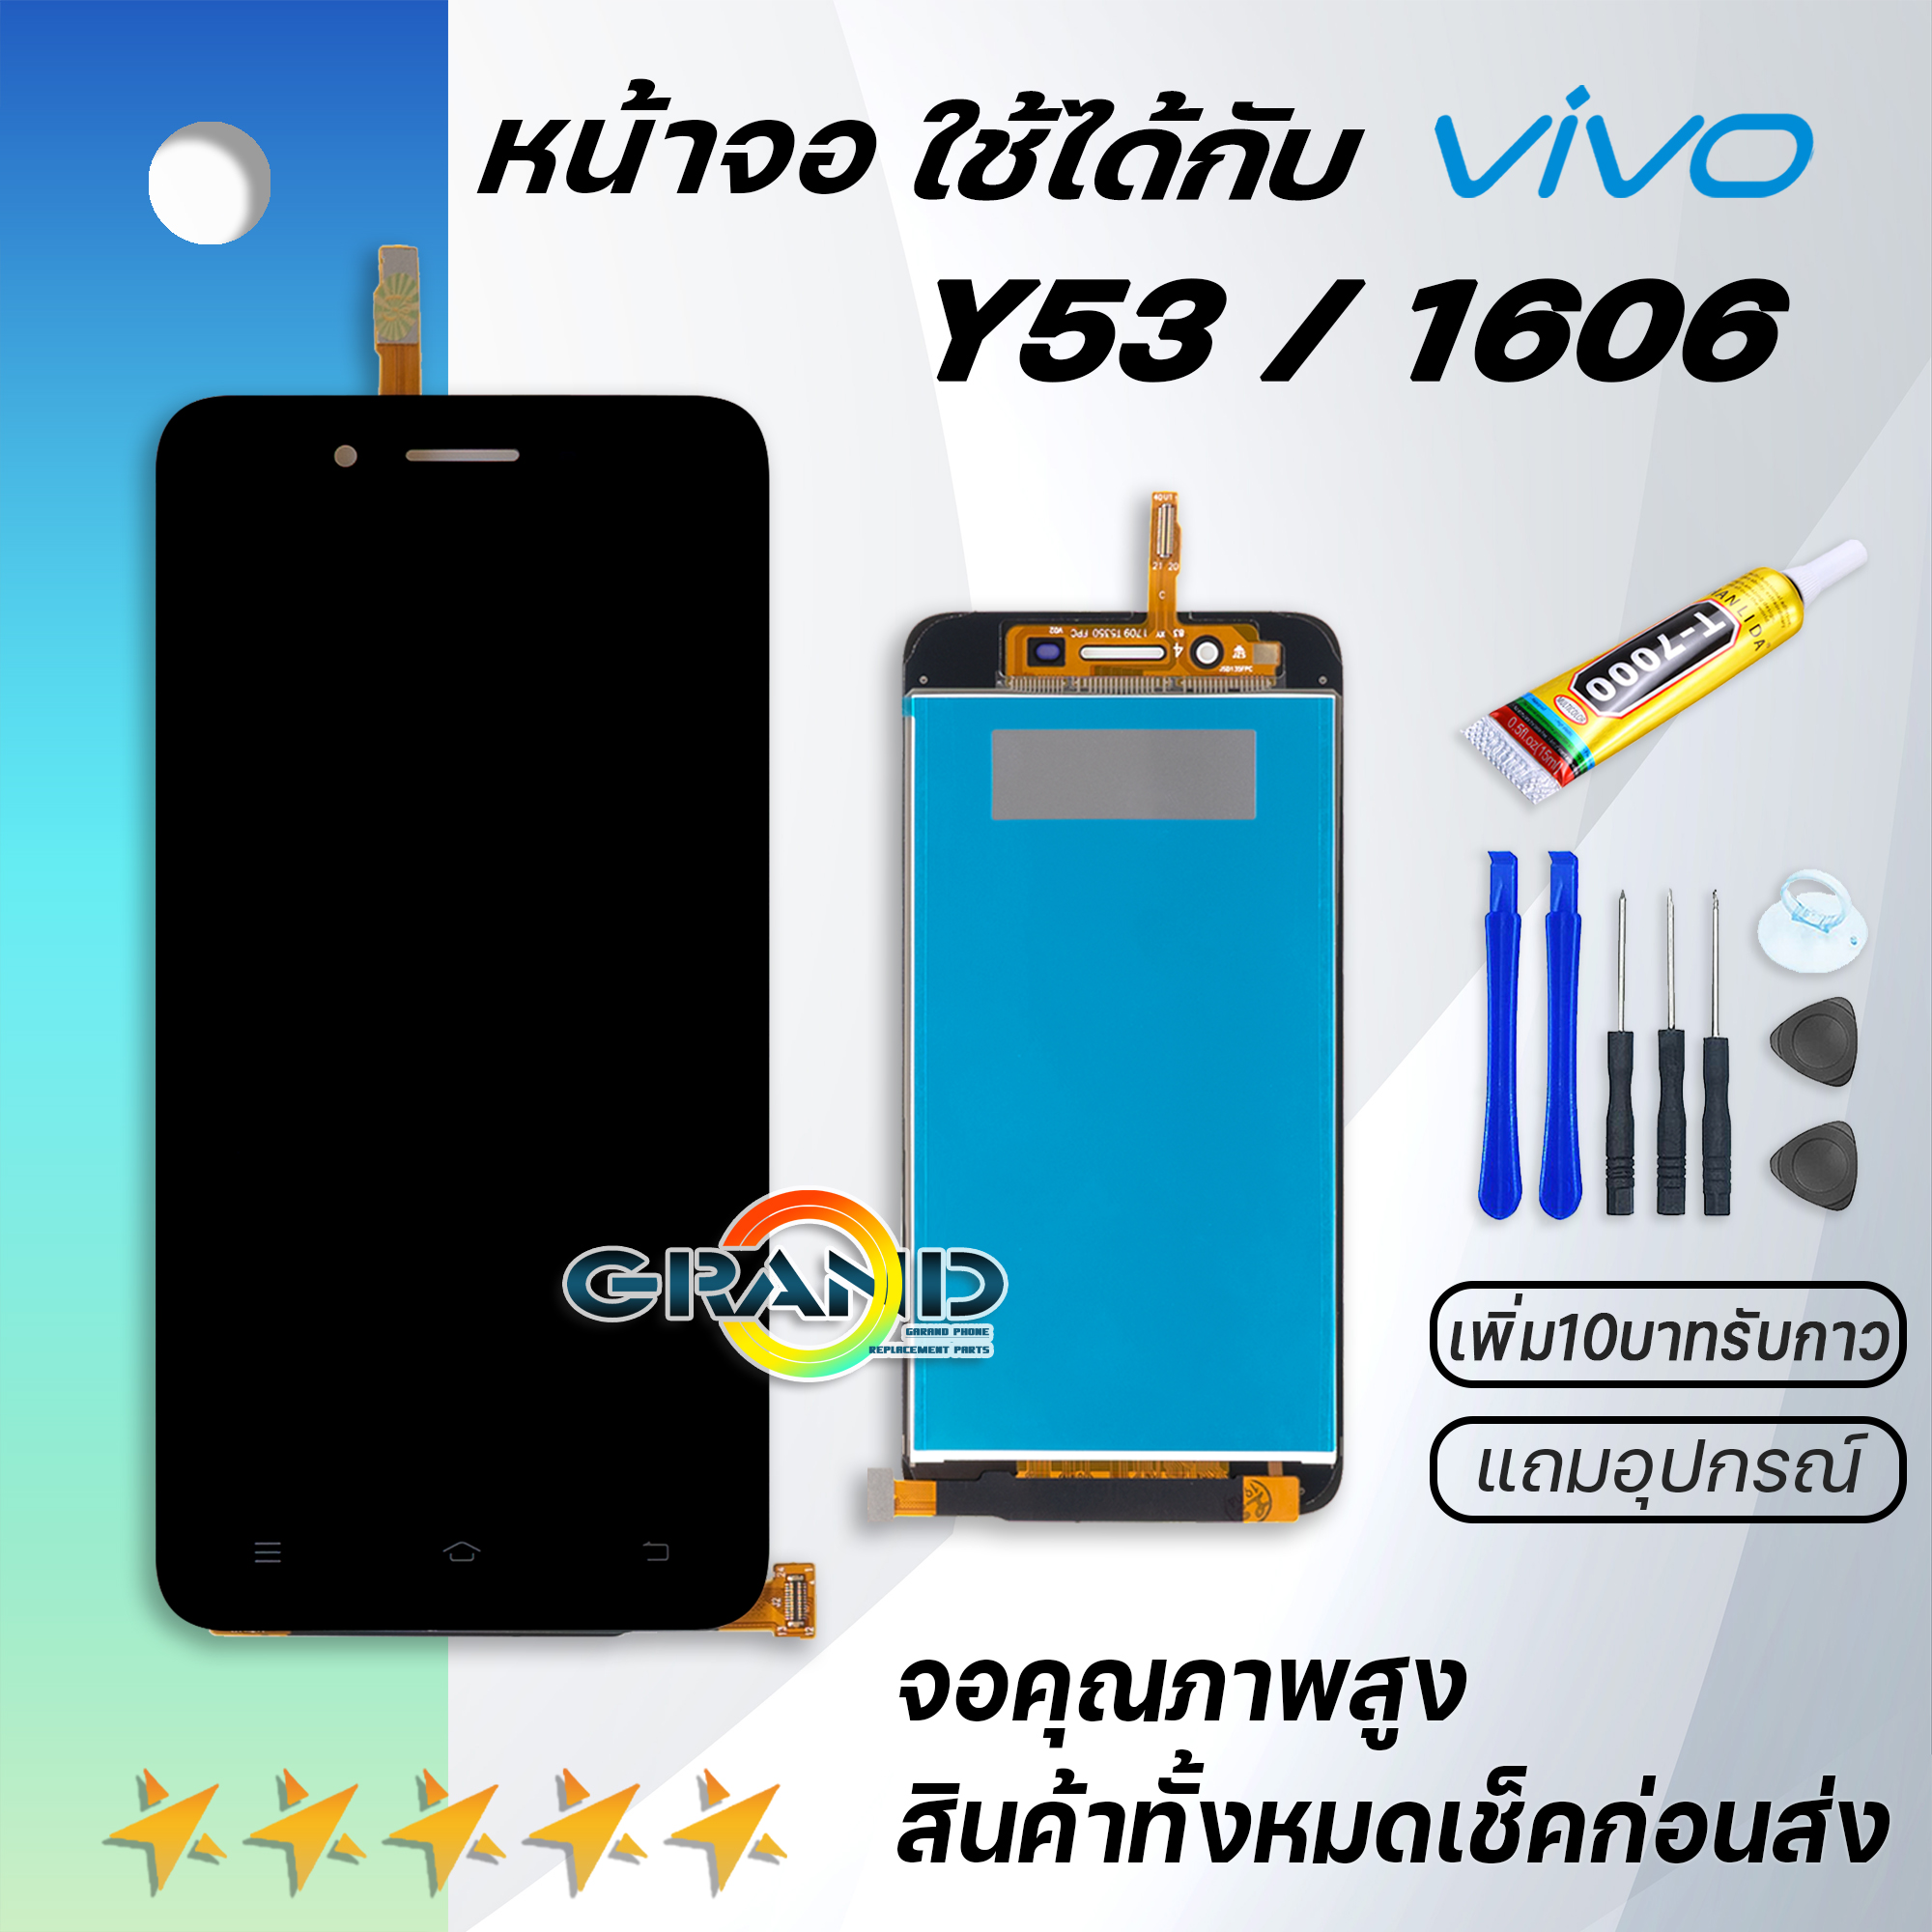 Grand Phone หน้าจอ vivo Y53,1606 หน้าจอ LCD พร้อมทัชสกรีน vivo Y53 LCD Screen Display Touch Panel For วีโว่ Y53 แถมไขควง สามารถเลือกซื้อพร้อมกาว